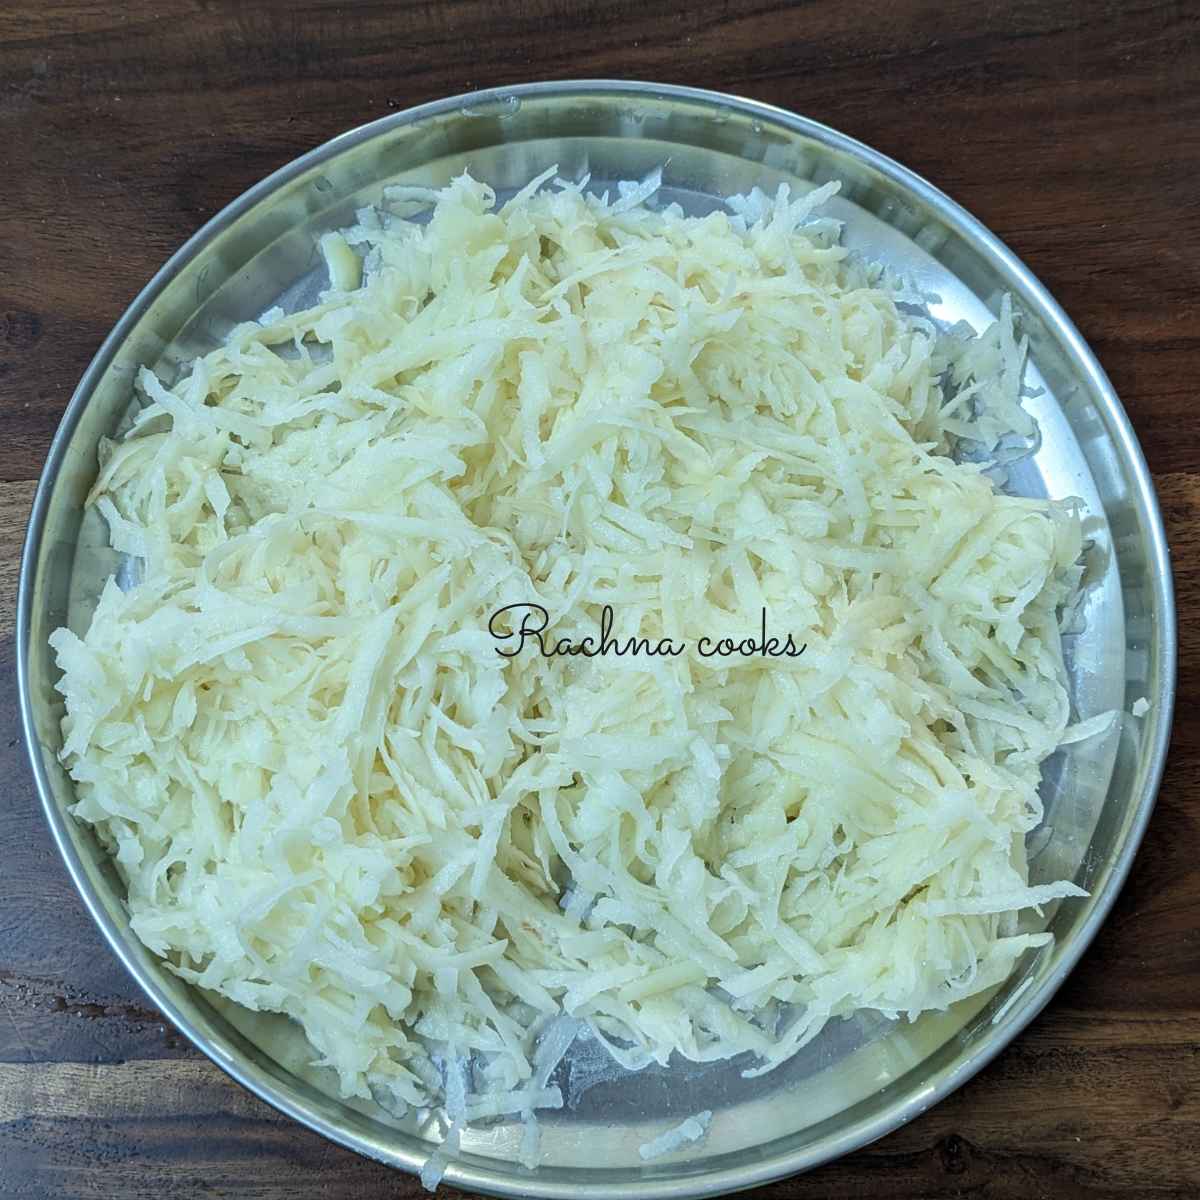 Shredded potatoes in a plate